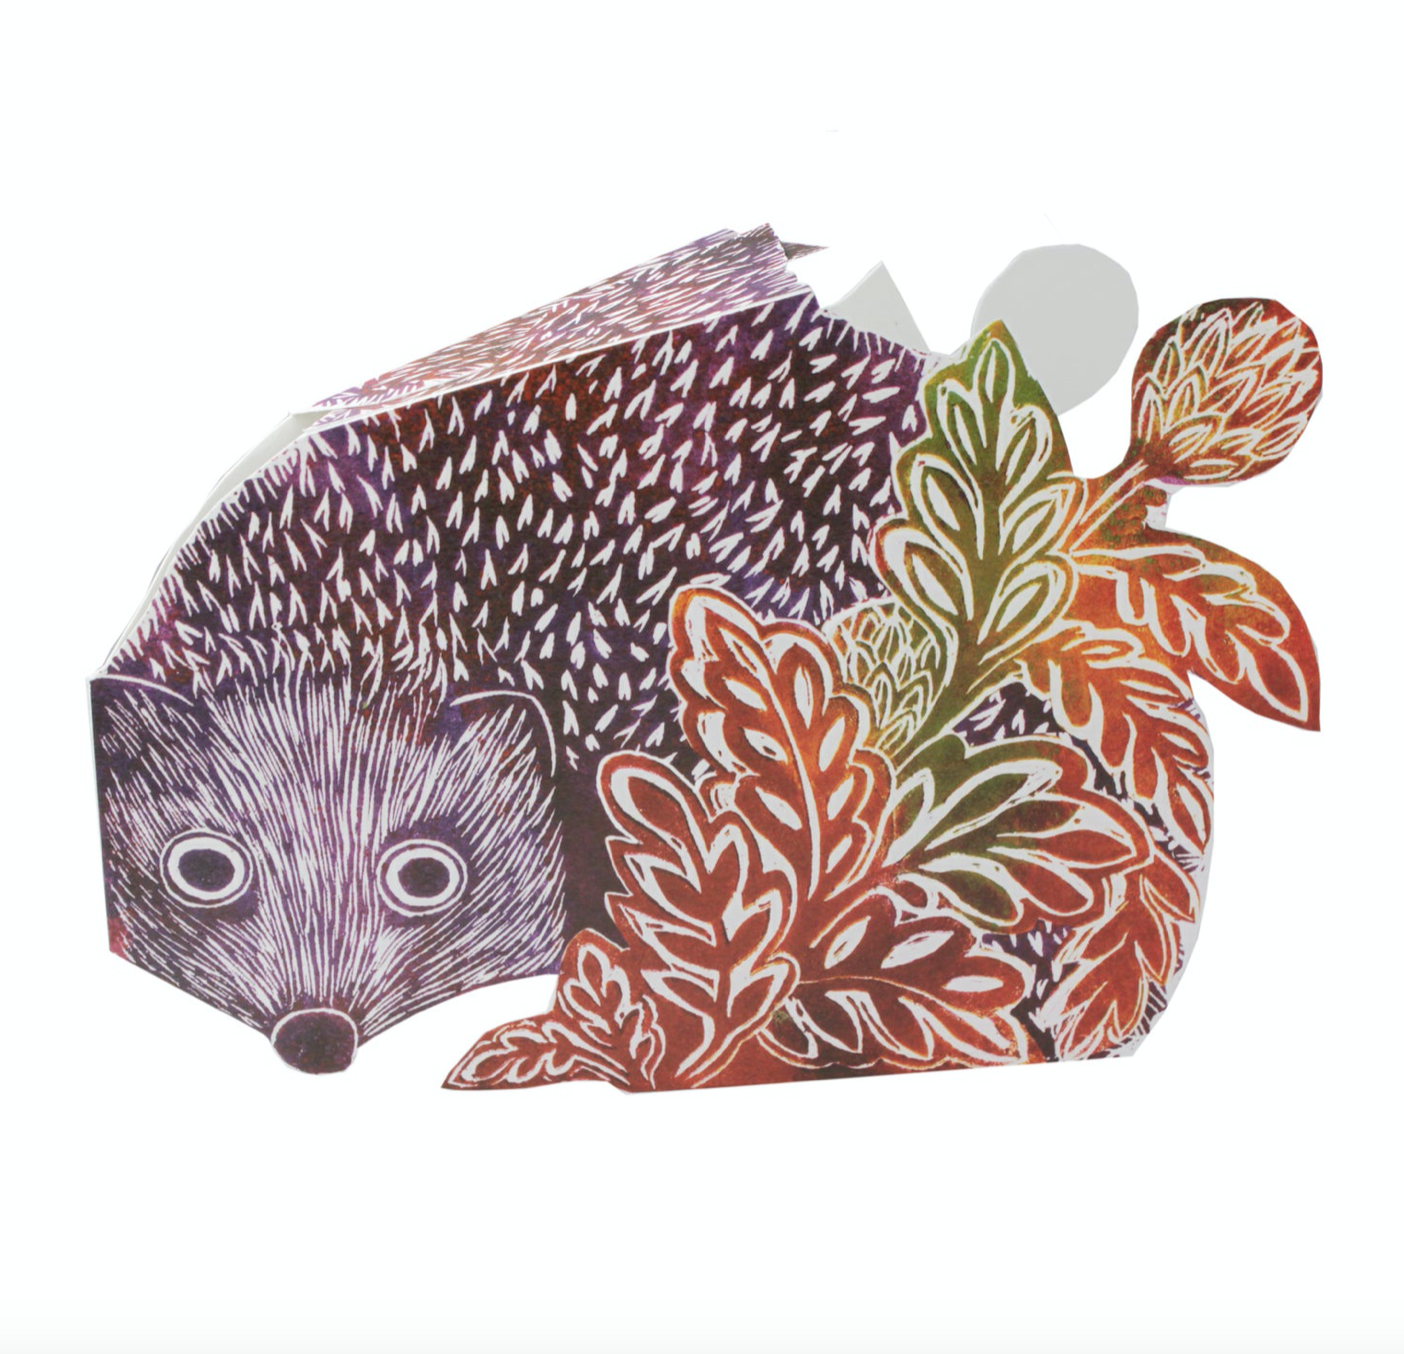 3D Hedgehog by Printmaker Judy Lumley